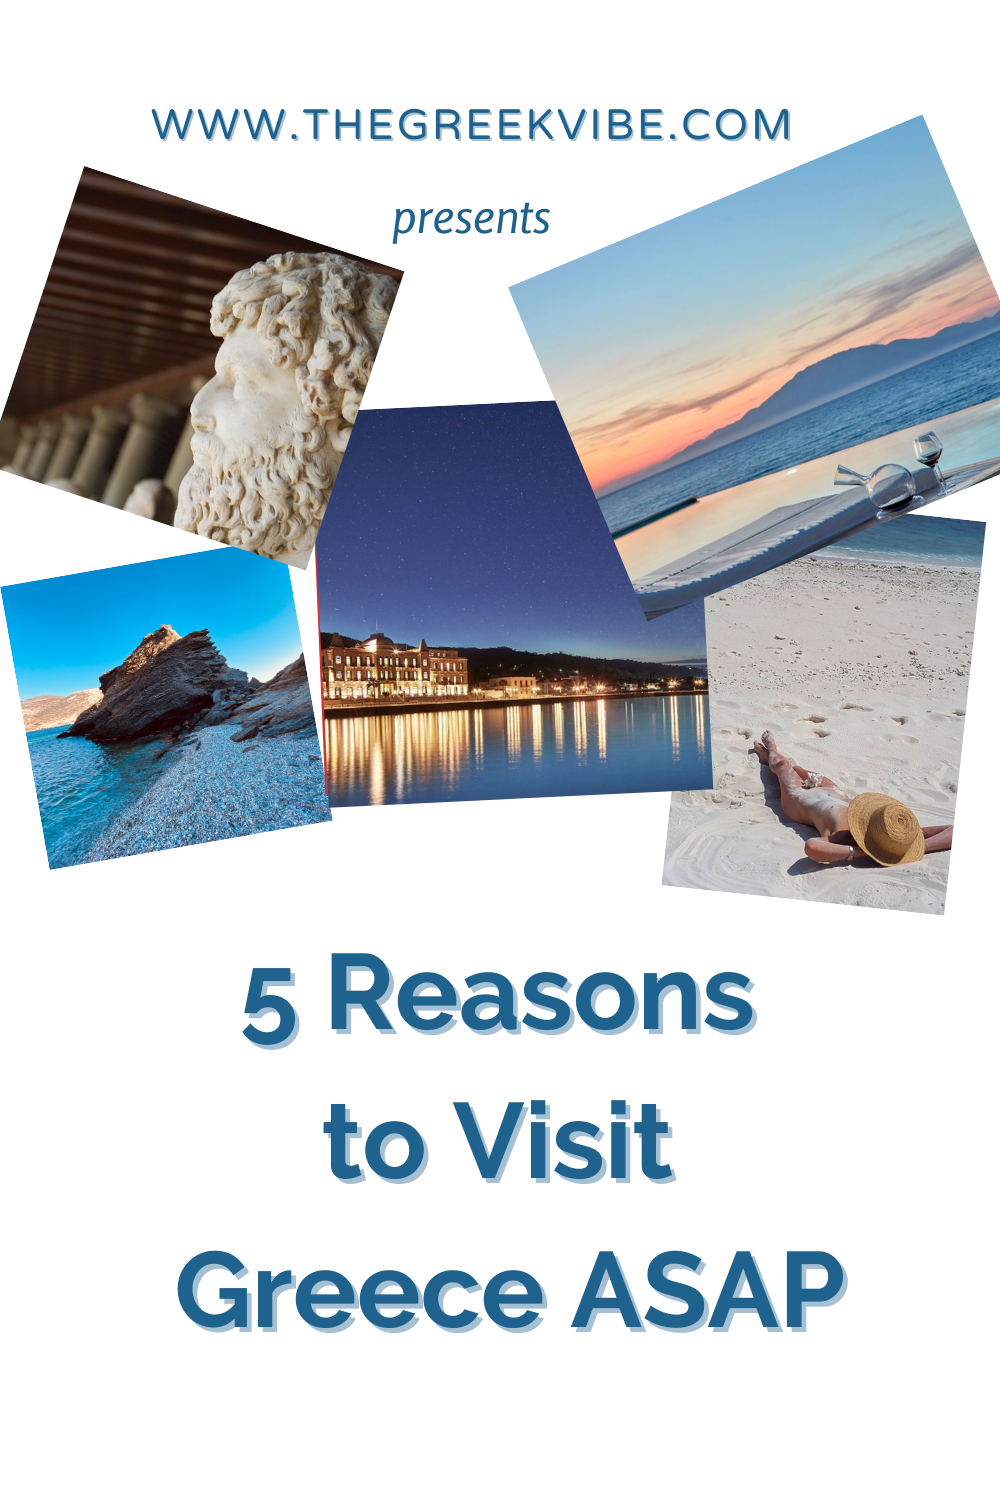 5 + 1 Reasons to Visit Greece ASAP